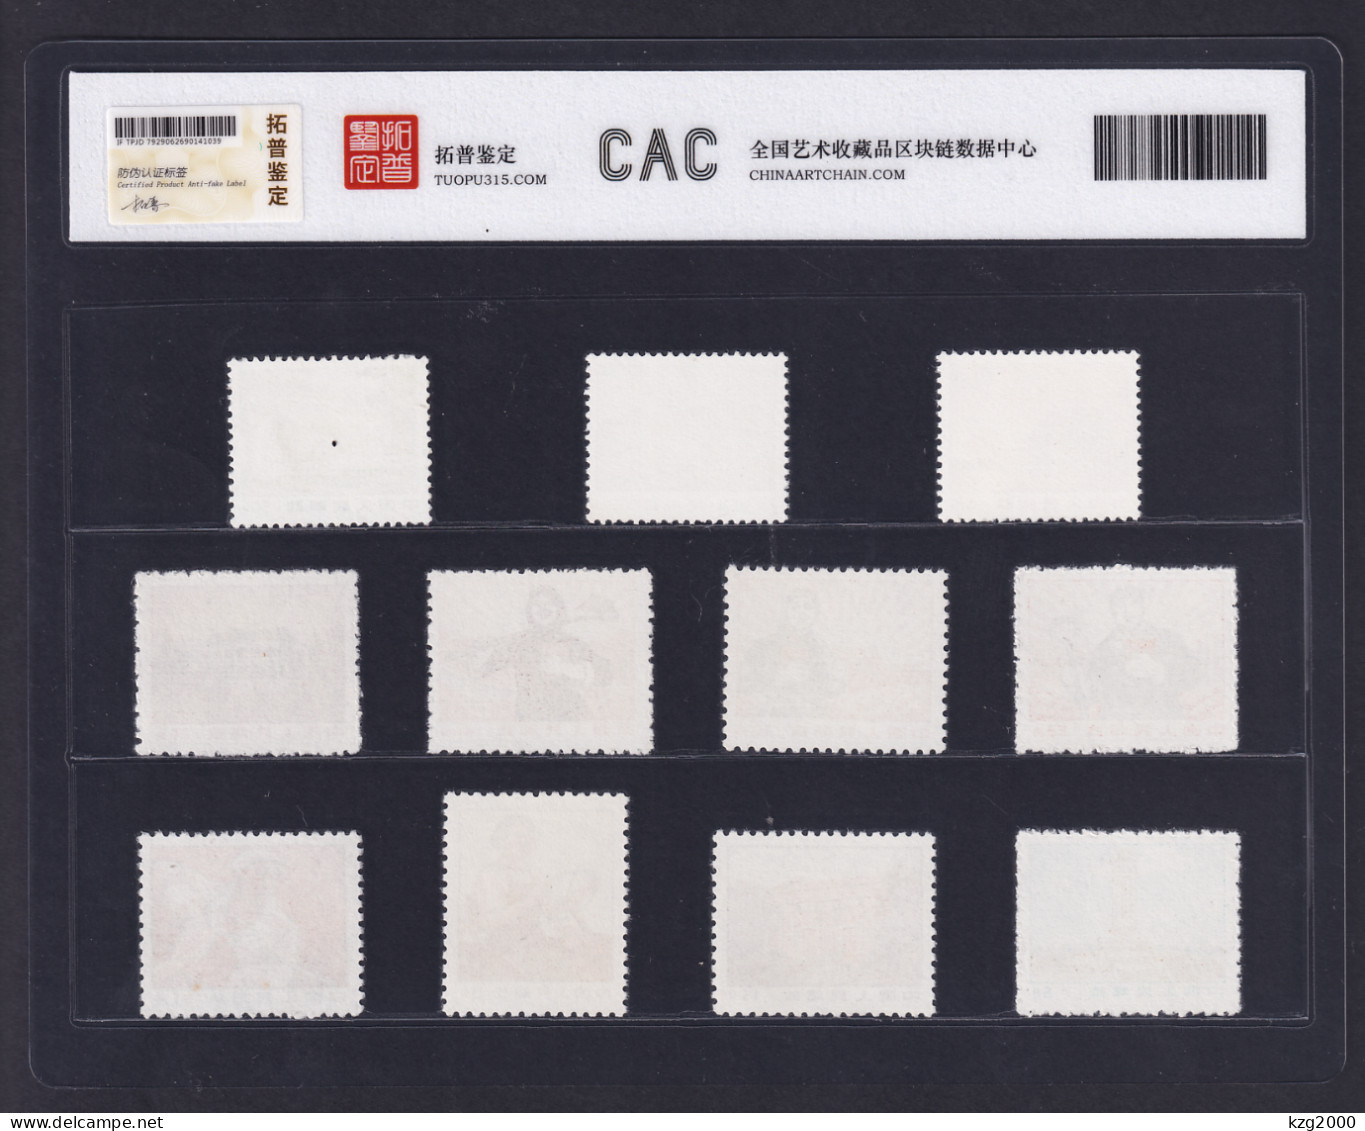 China 1969 RNil Regular Issue For “Cultural Revolution” Full Set Stamp Grade 98 - Unused Stamps